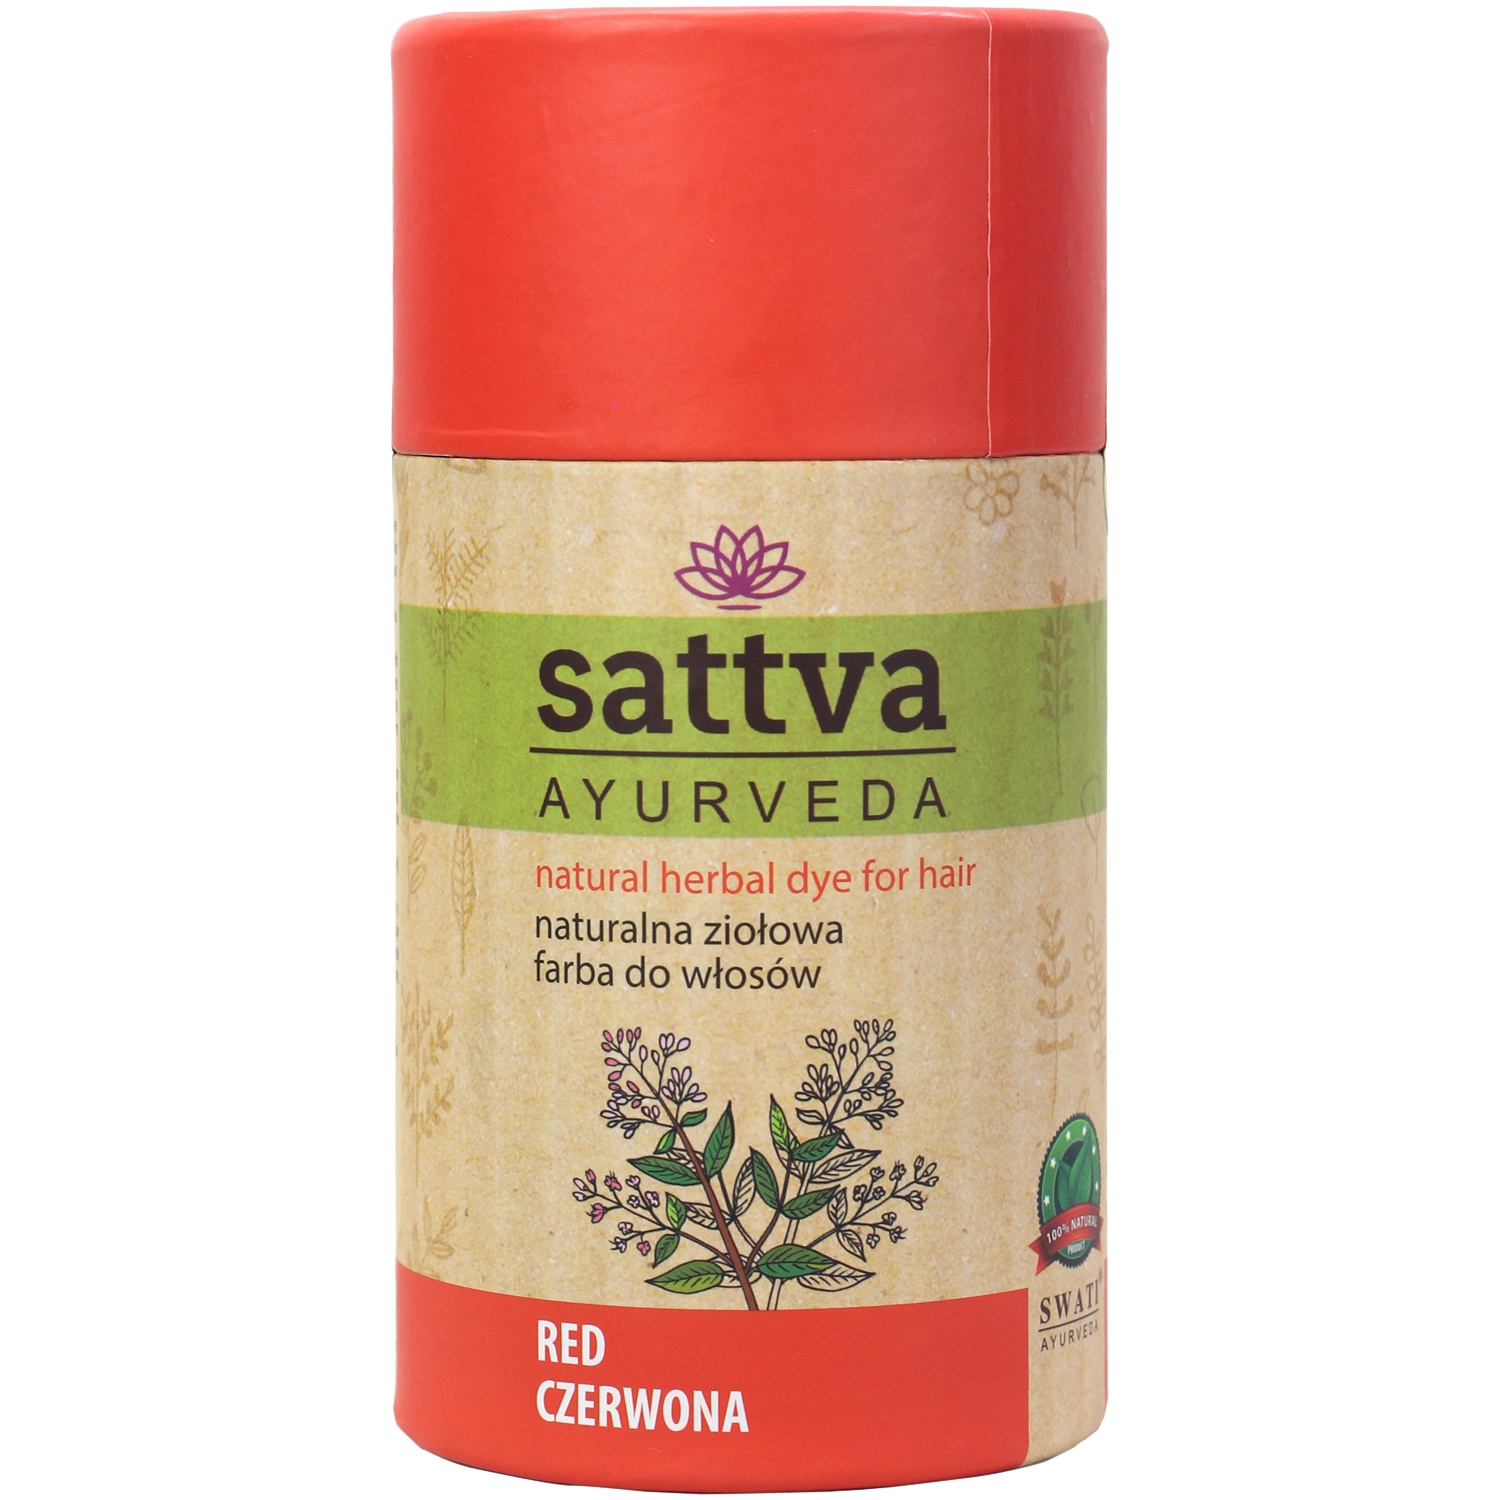 Sattva Red натуральная травяная краска для волос красный, 150 г